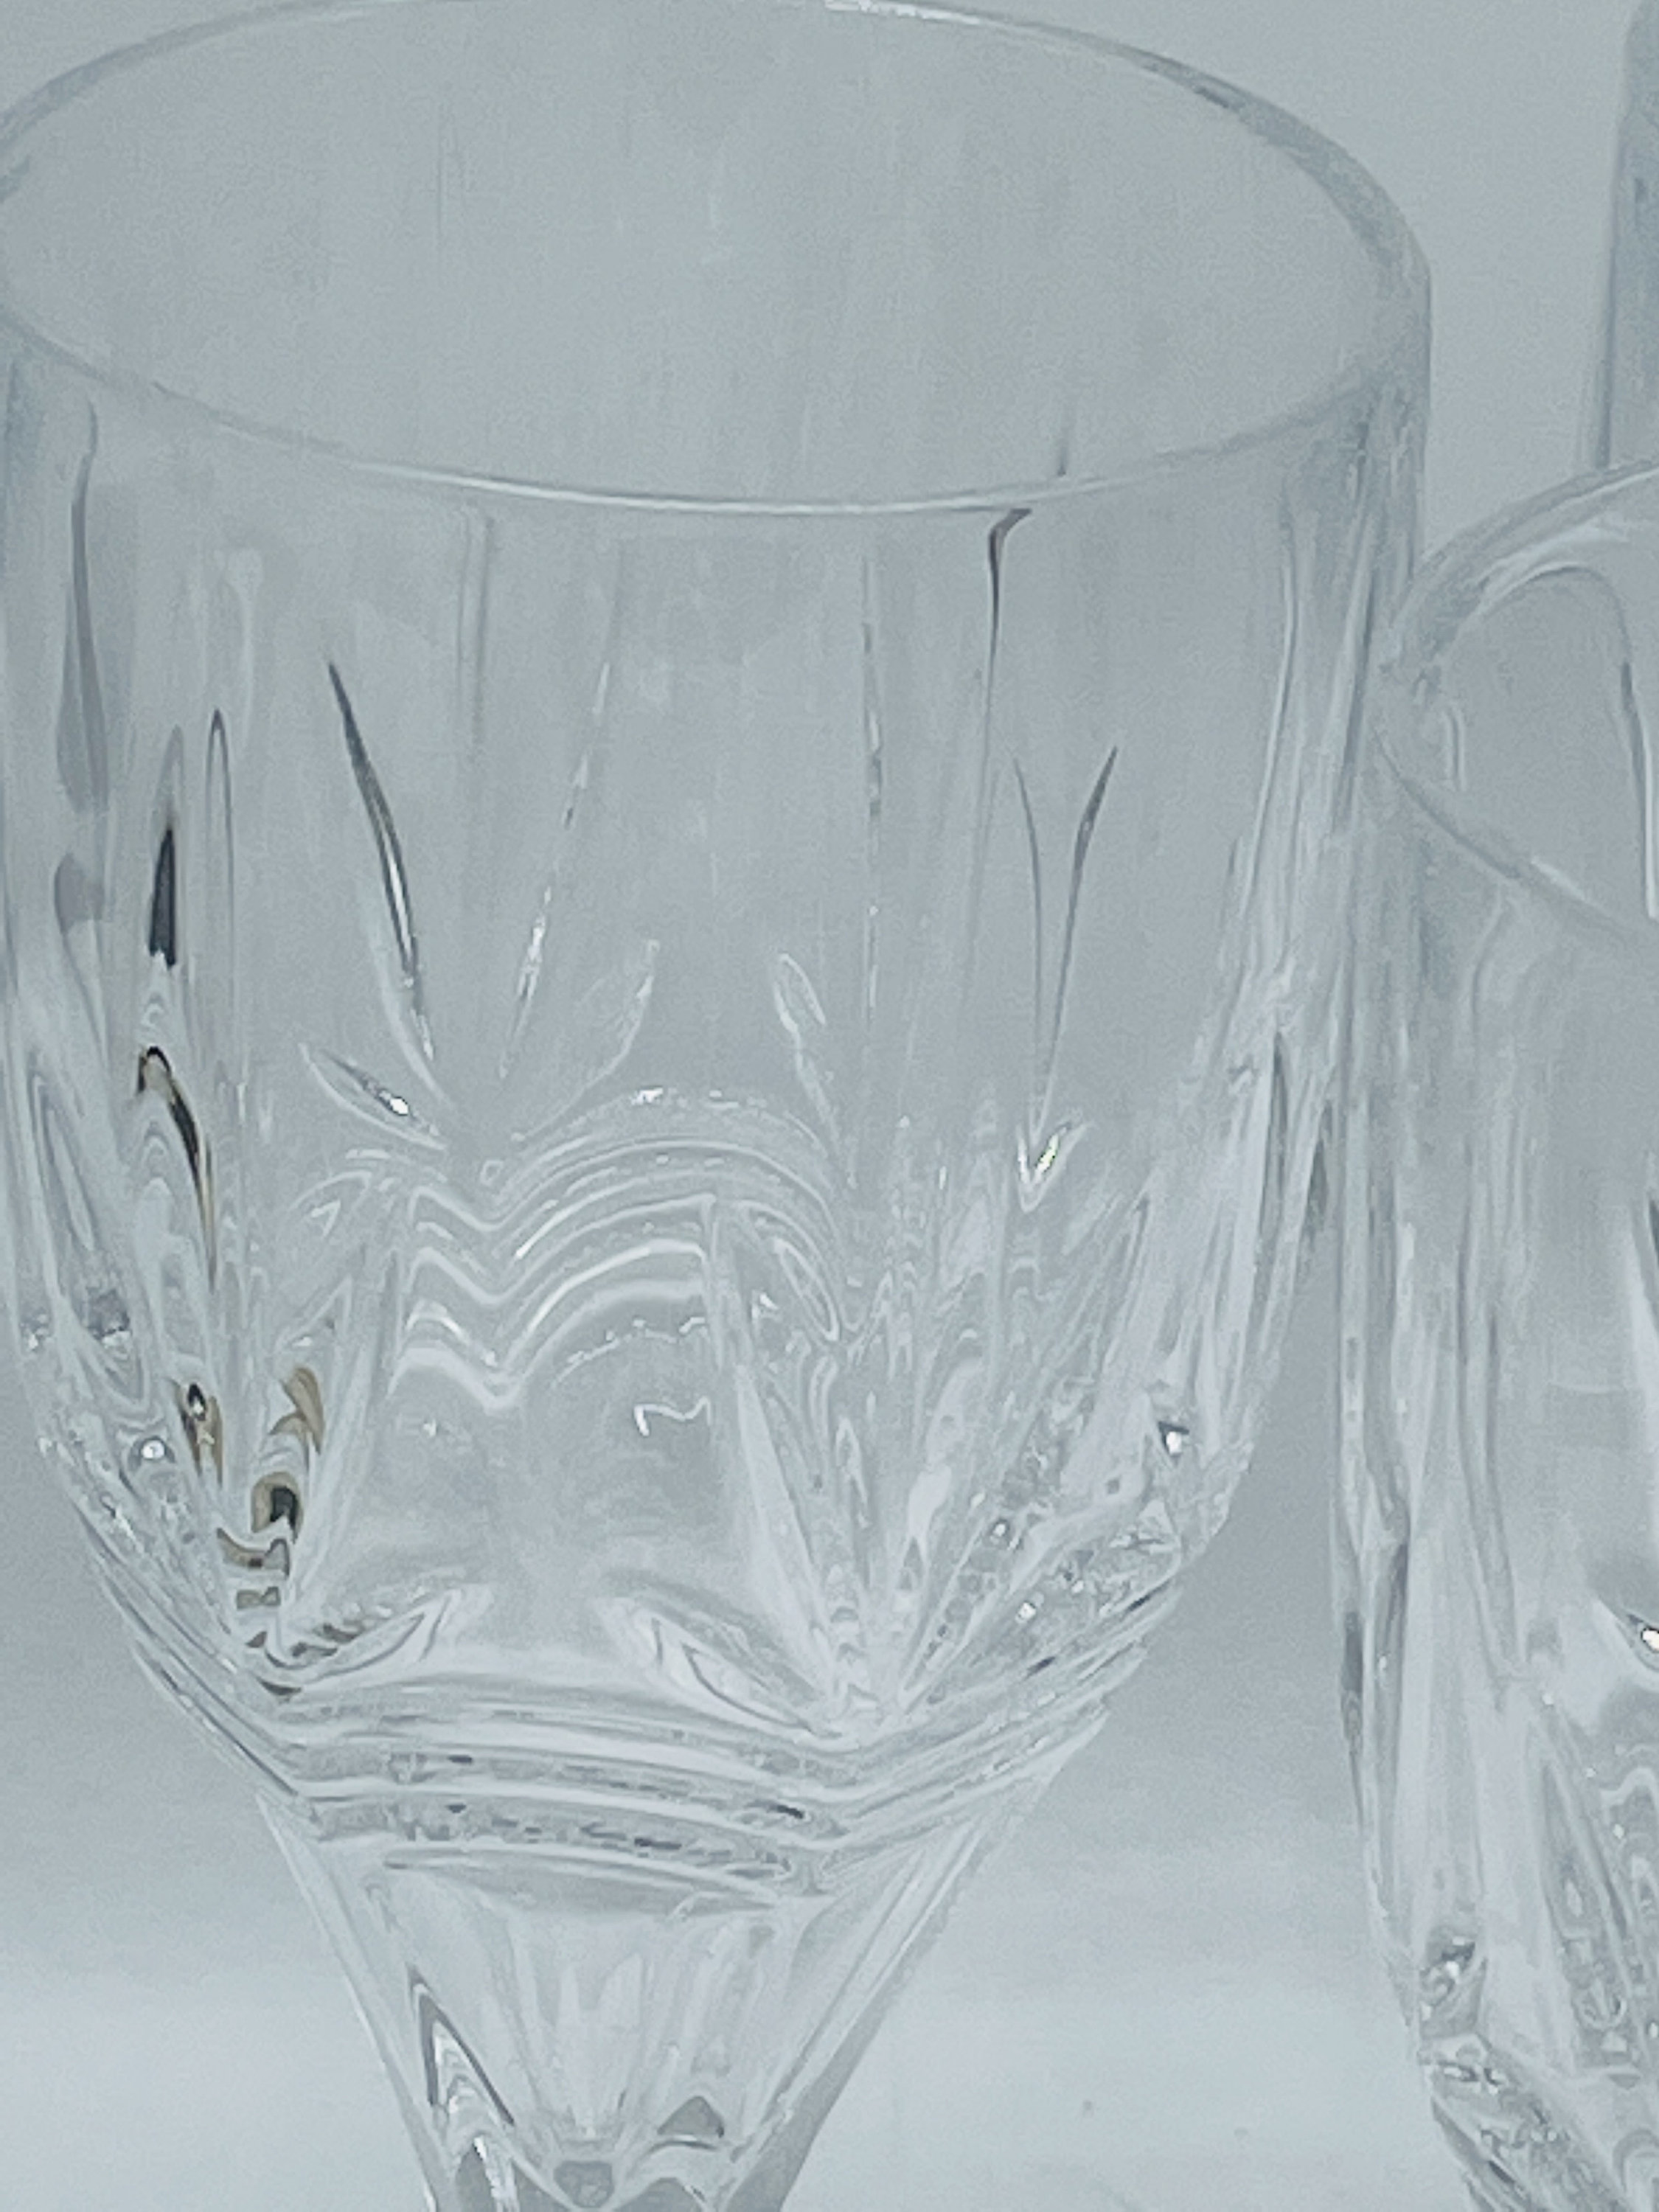 Vintage Set of Four Wine Glass Goblet Fan Drape Design Sturdy